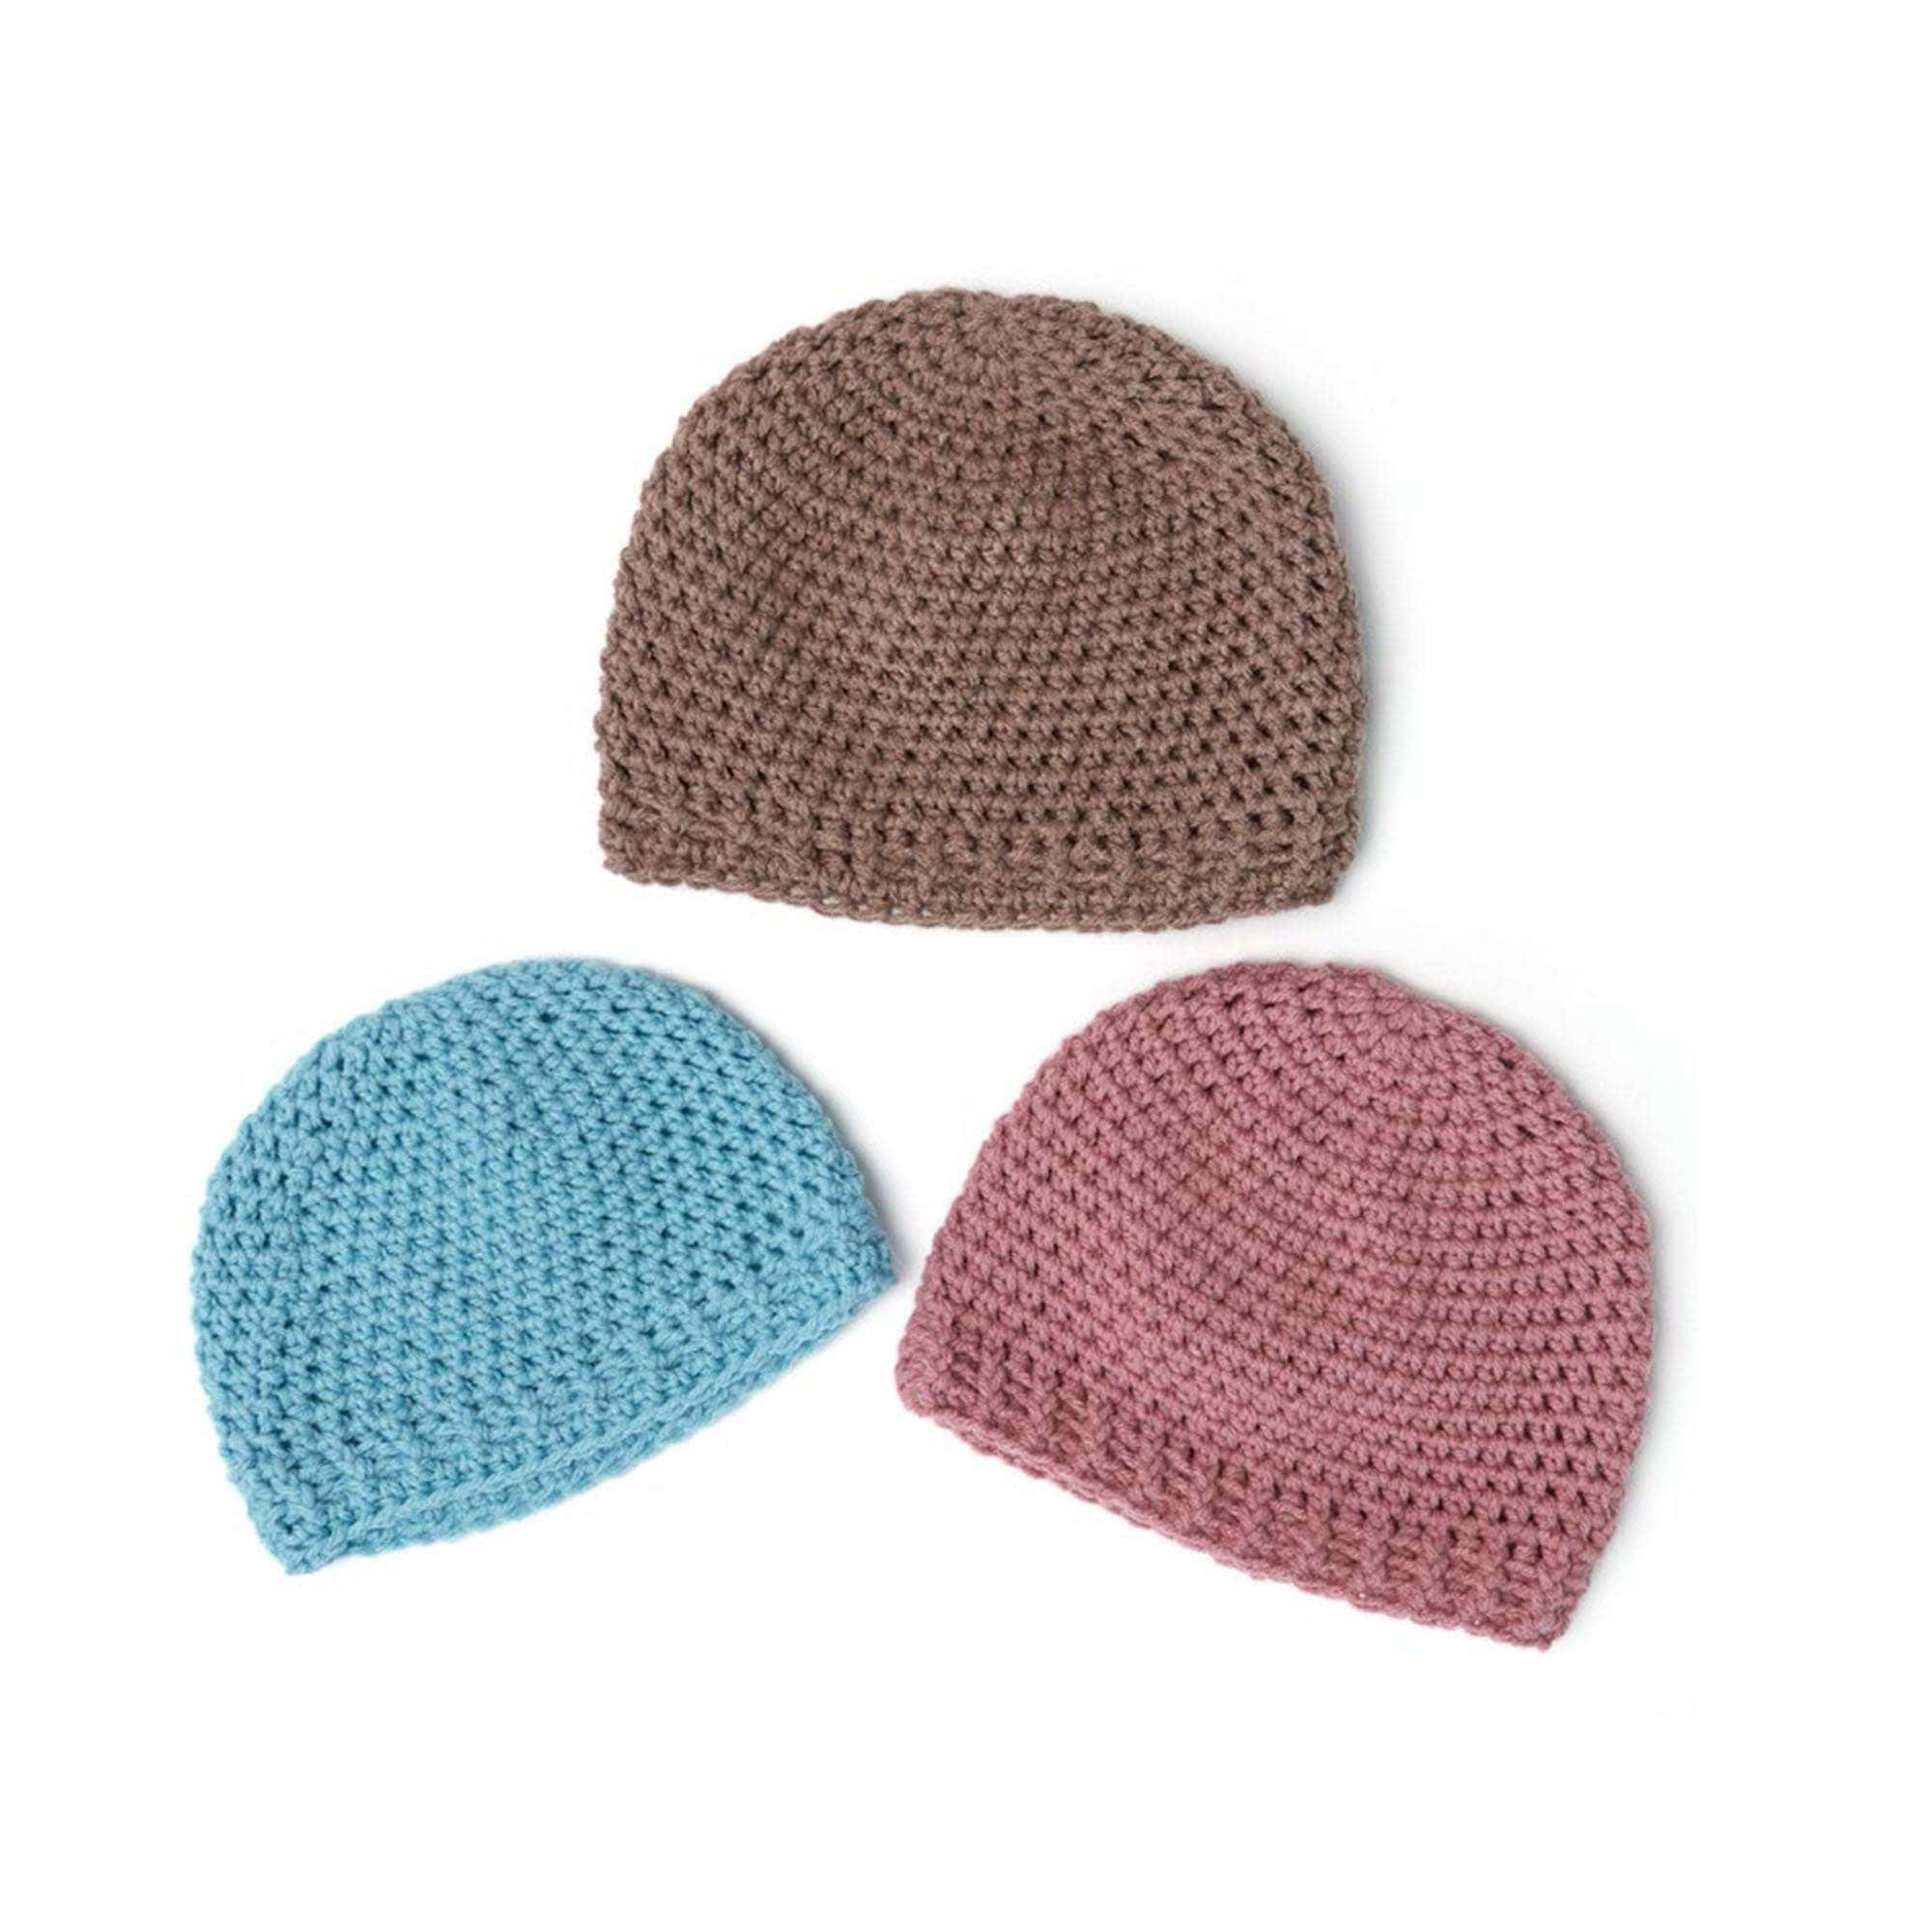 50 Free Crochet Hat Patterns - Daisy Farm Crafts